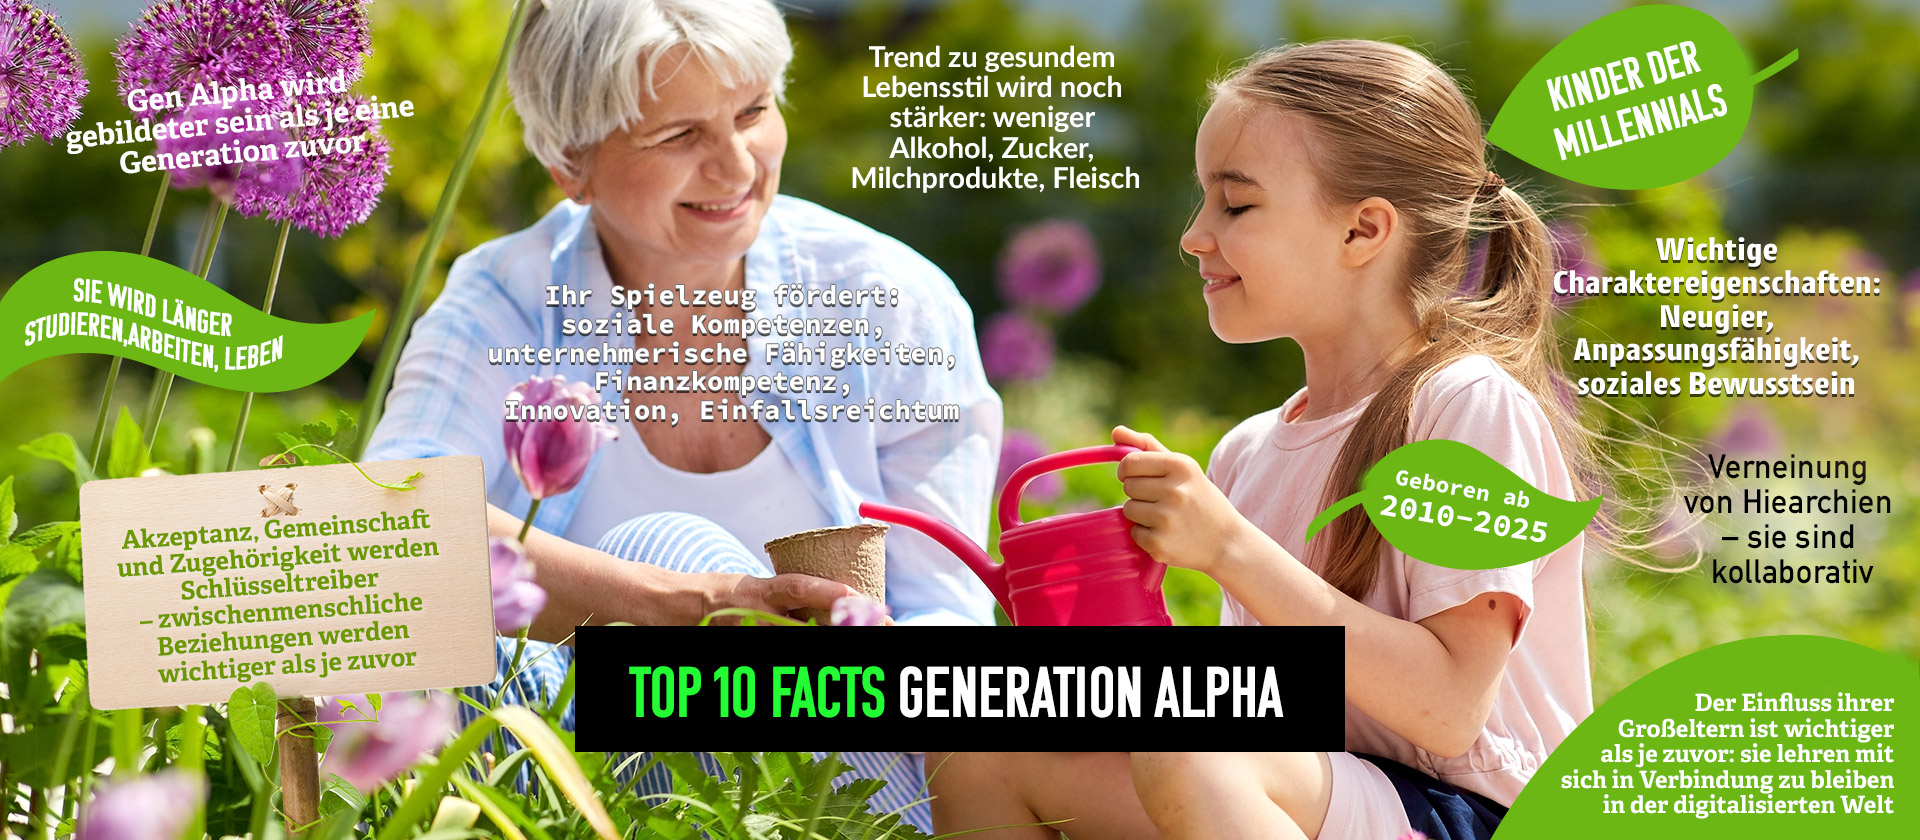 Kindermarketing Facts Generation Alpha